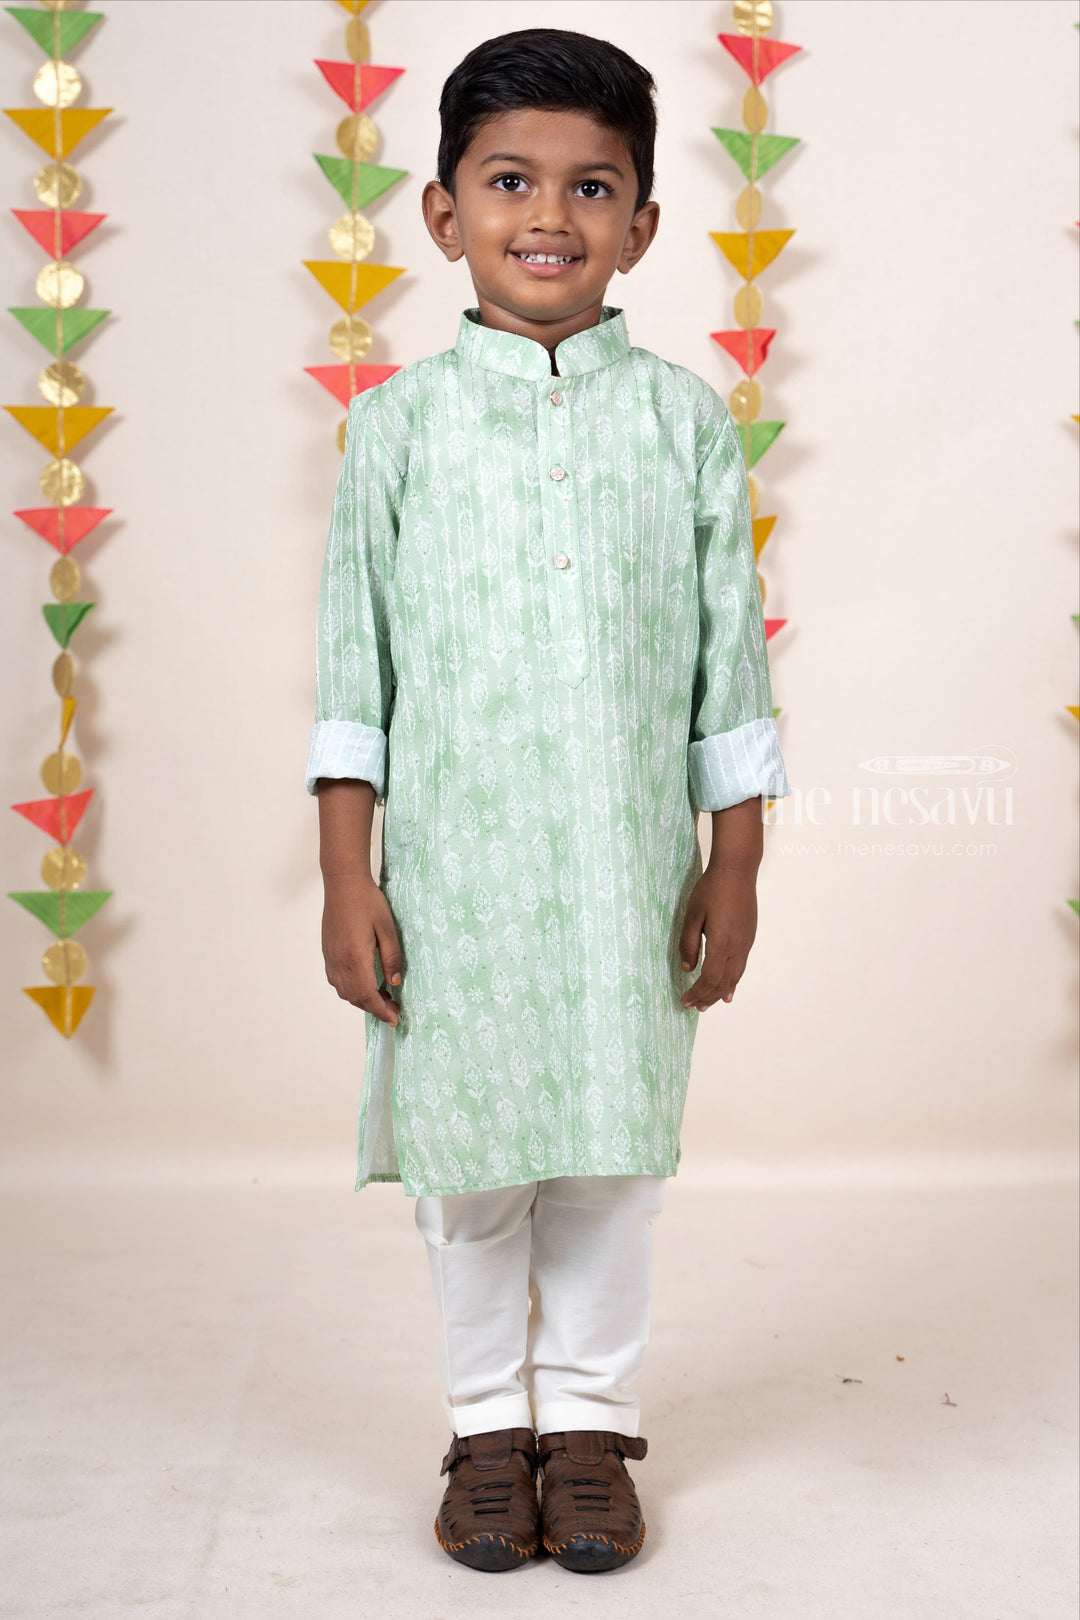 The Nesavu Ethnic Sets Mint Green Cotton Kurta Outfit For Baby Boys Attached With Pant psr silks Nesavu 14 (6M) / Springgreen BES137